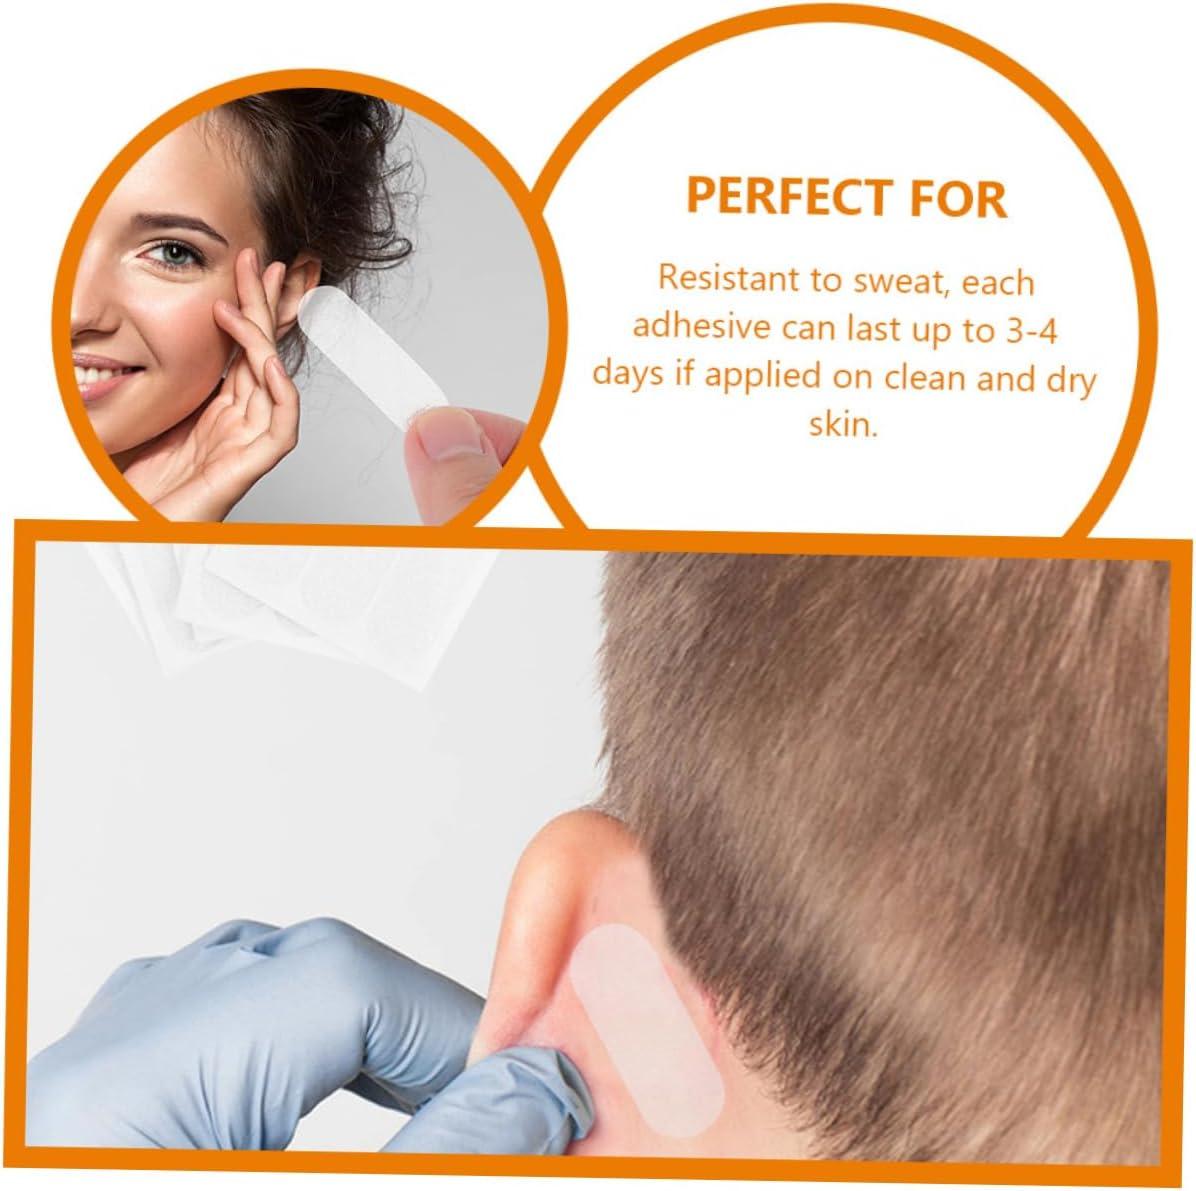 Operitacx 6pcs Ear Stickers Correction Stickers Tomorrow